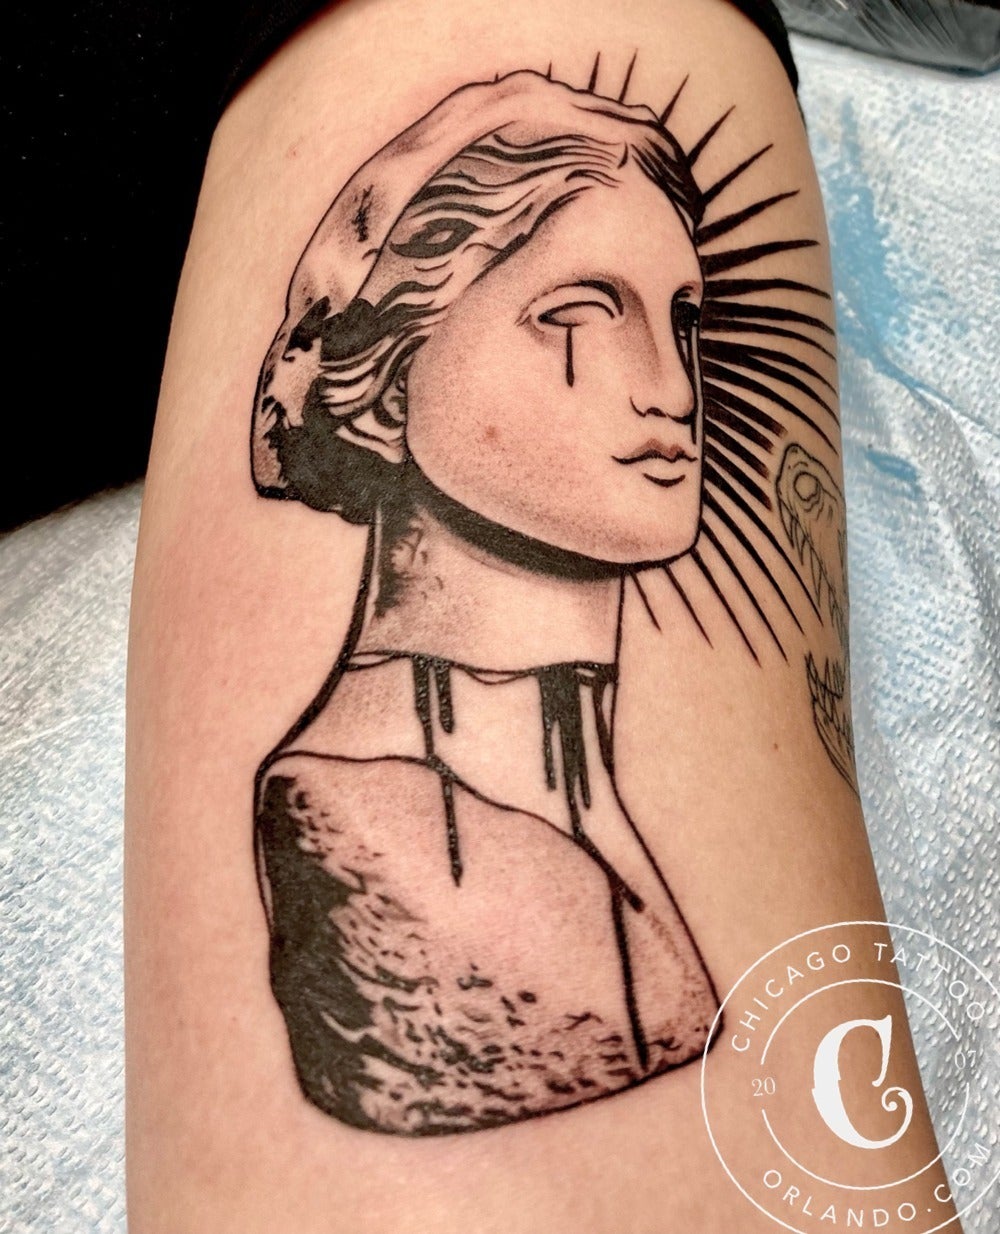 chicago tattoo | CHIP DOUGLAS